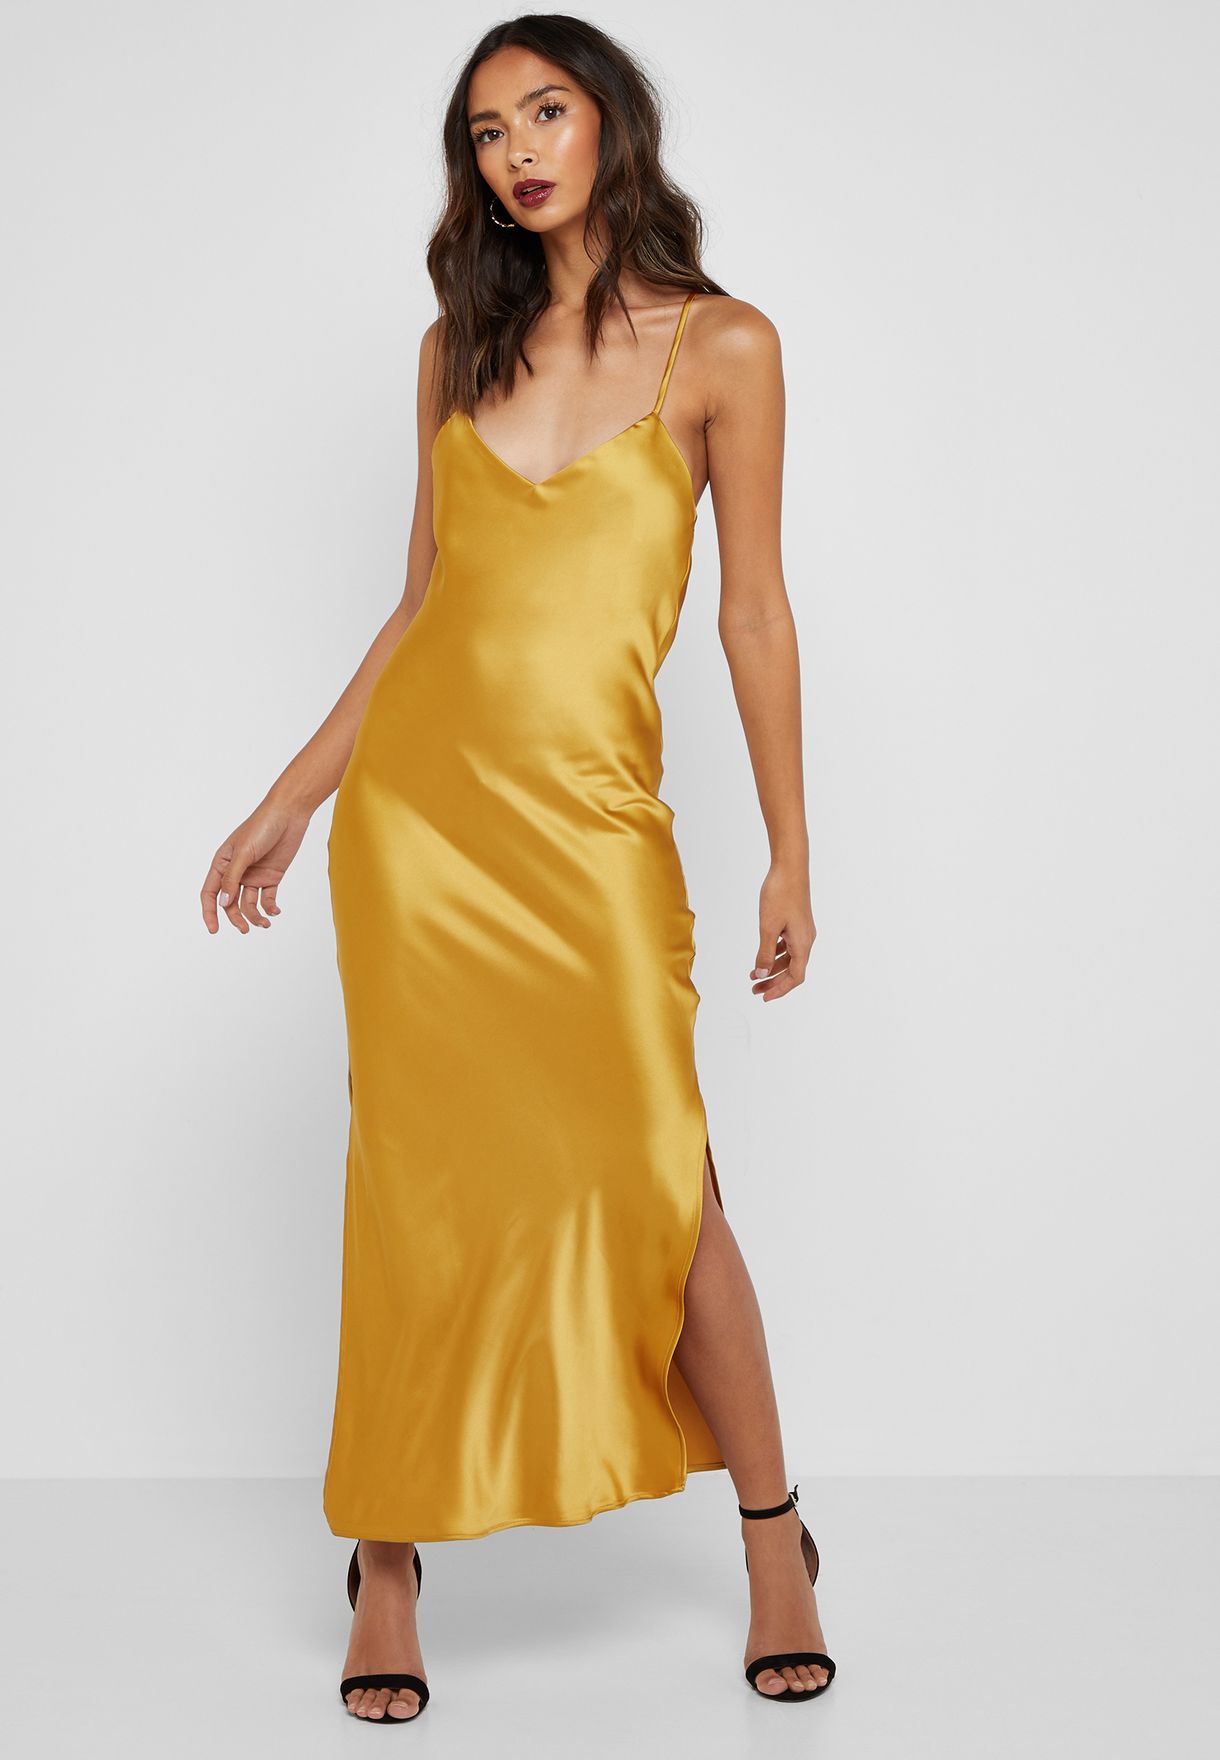 topshop gold slip dress